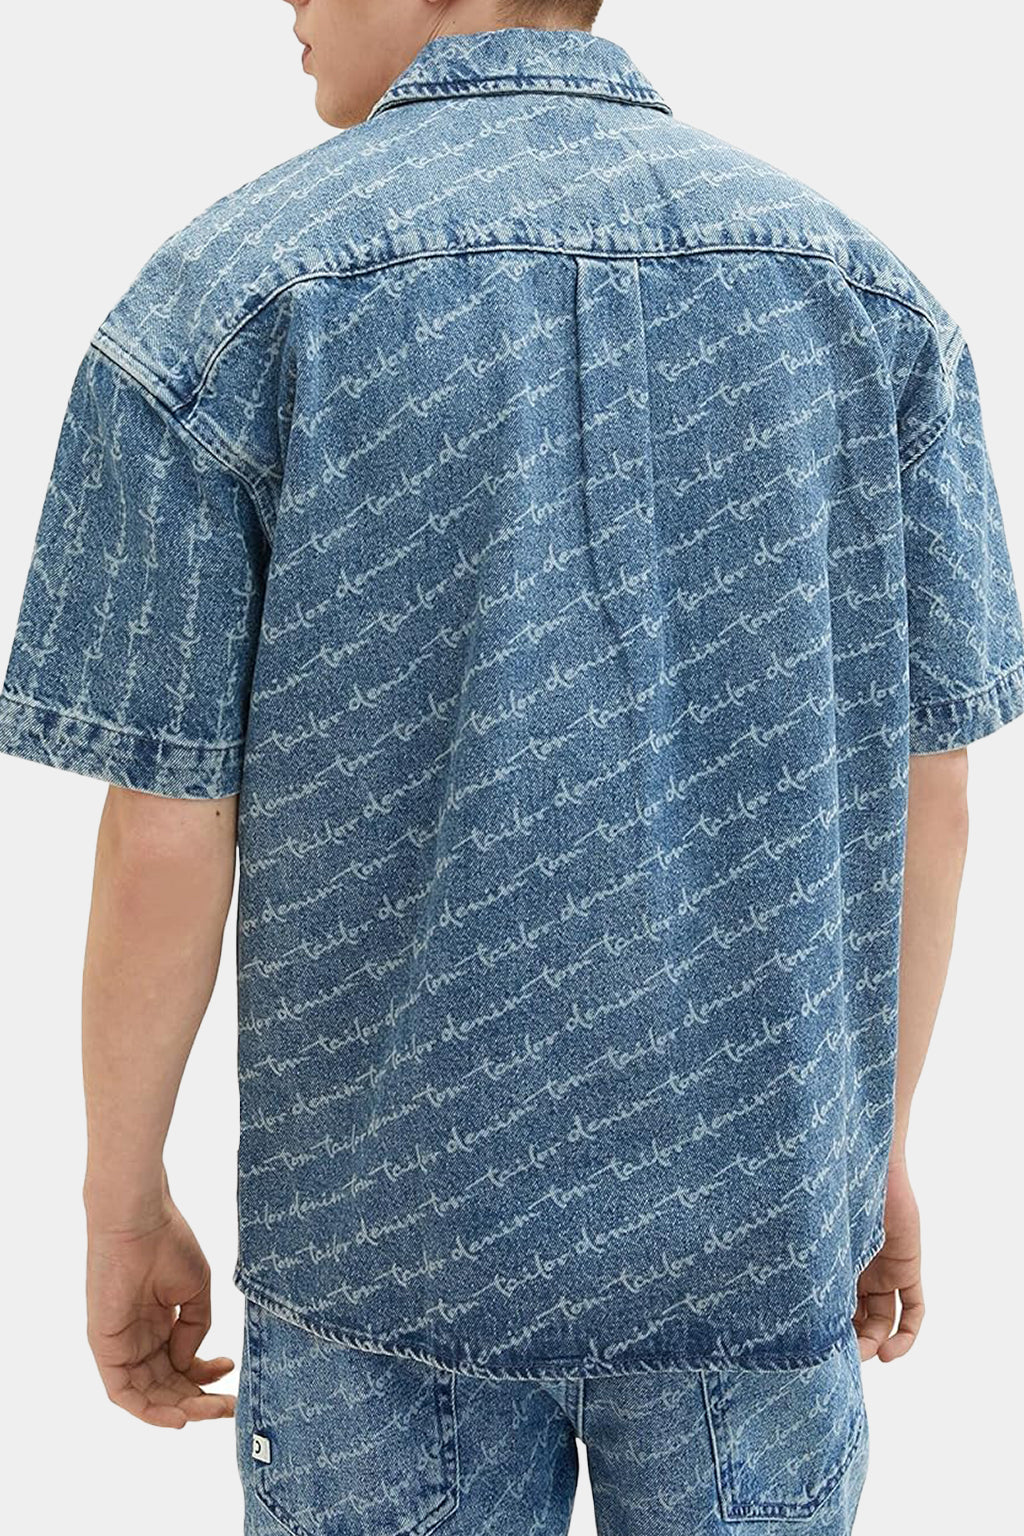 Tom Tailor - Denim Shirt With Lettering